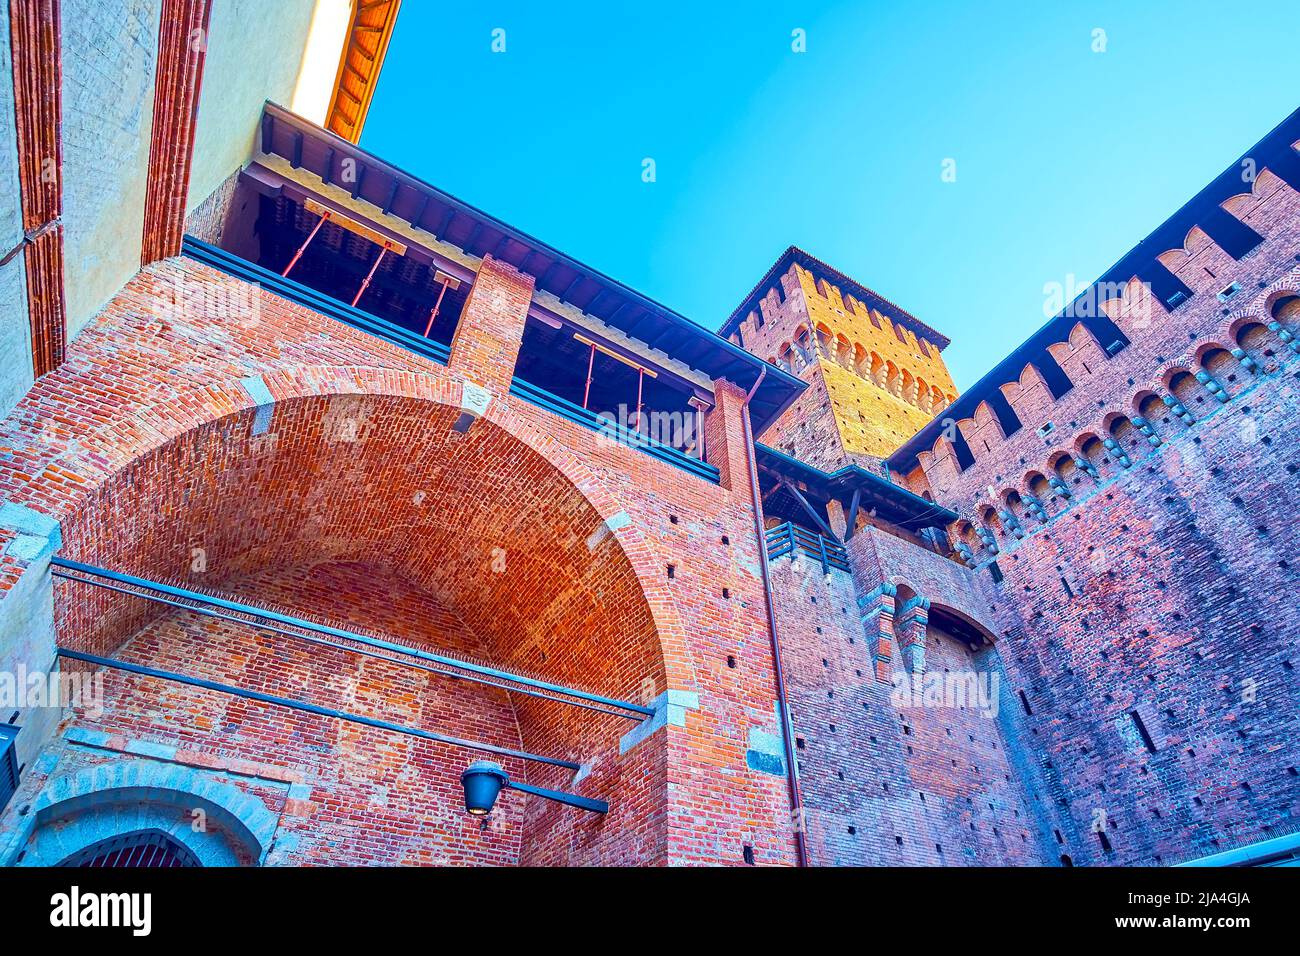 The brick medieval inner gates and Bona di Savoia tower of Sforza's Castle, Milan, Italy Stock Photo